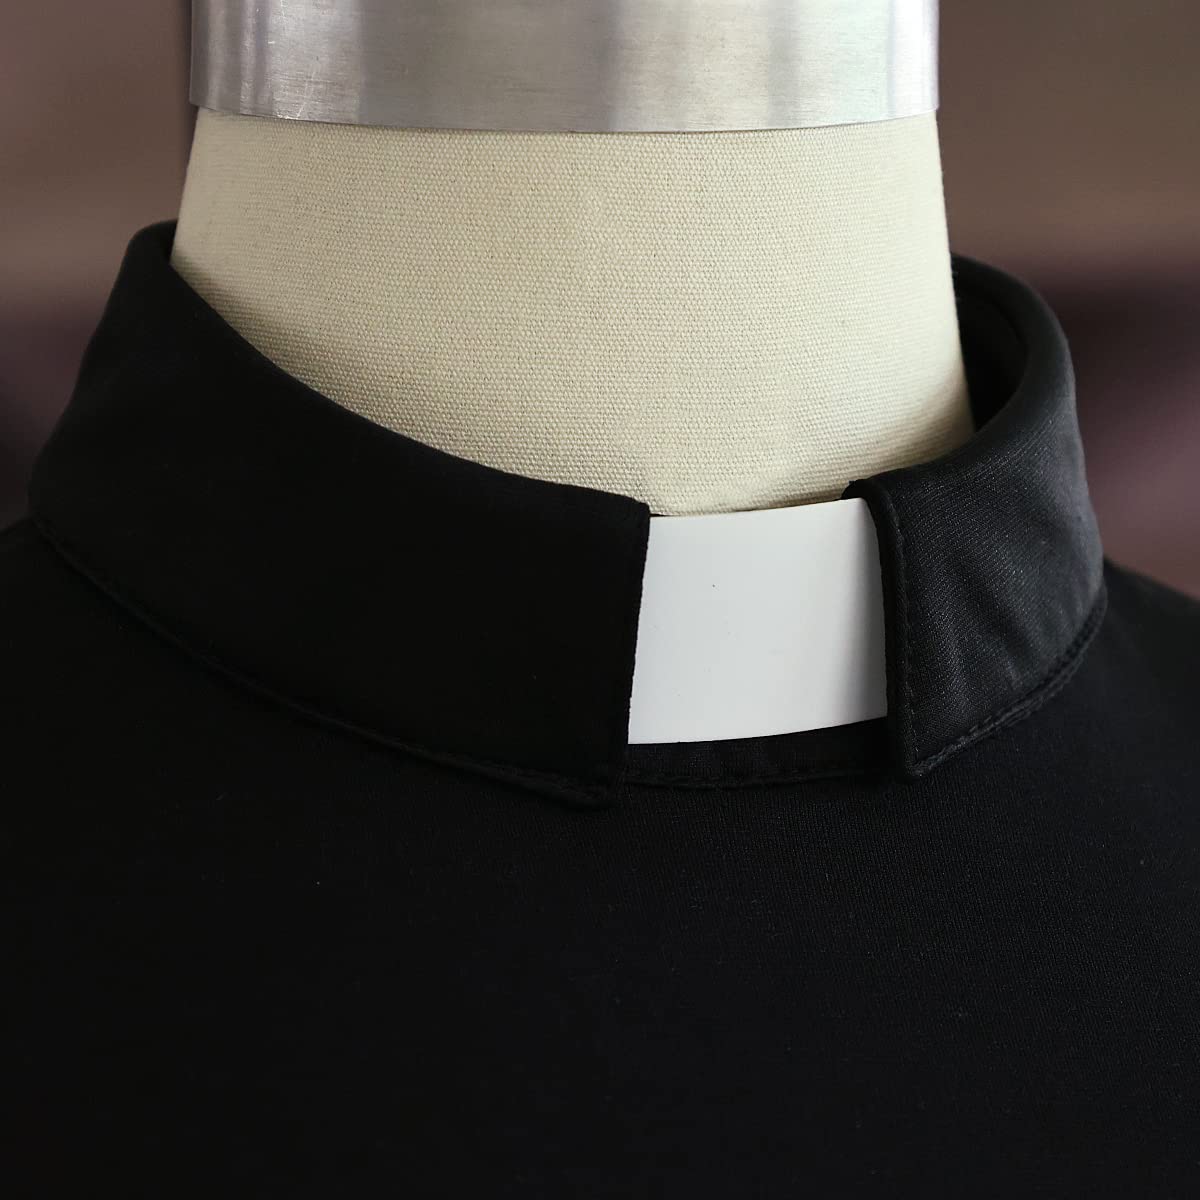 BLESSUME Church Clergy Women Tab Collar Dress Black Short Sleeve Mass Pencil Dress